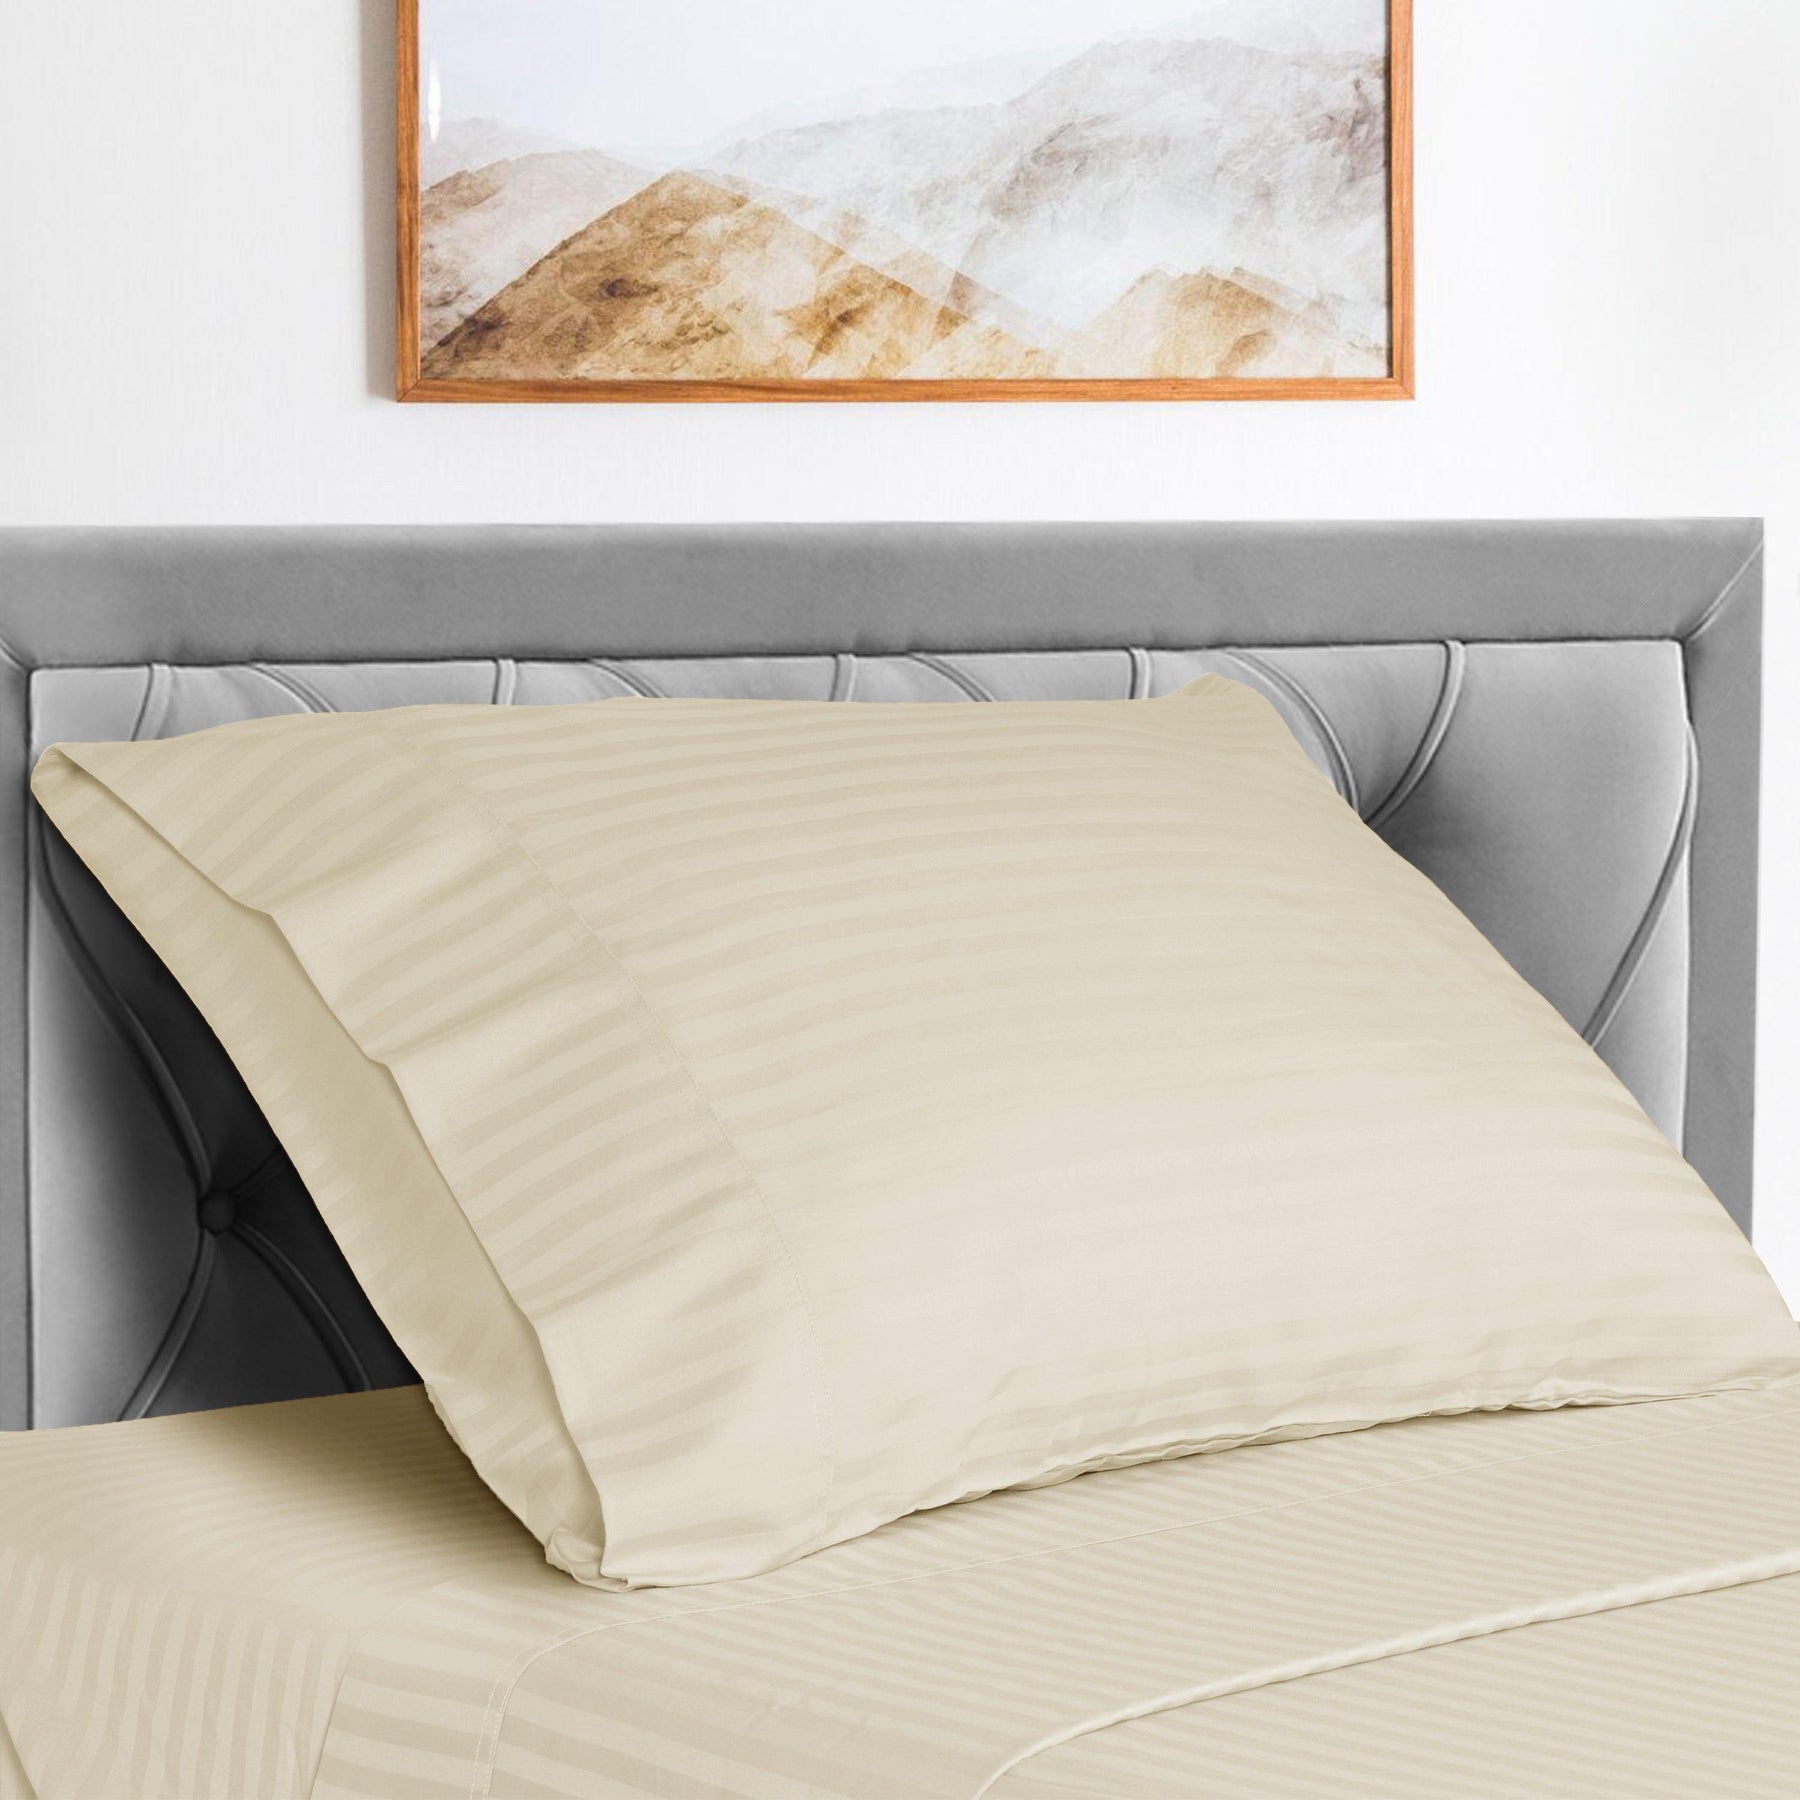  Superior Microfiber Wrinkle Resistant and Breathable Stripe Deep Pocket Bed Sheet Set - Tan